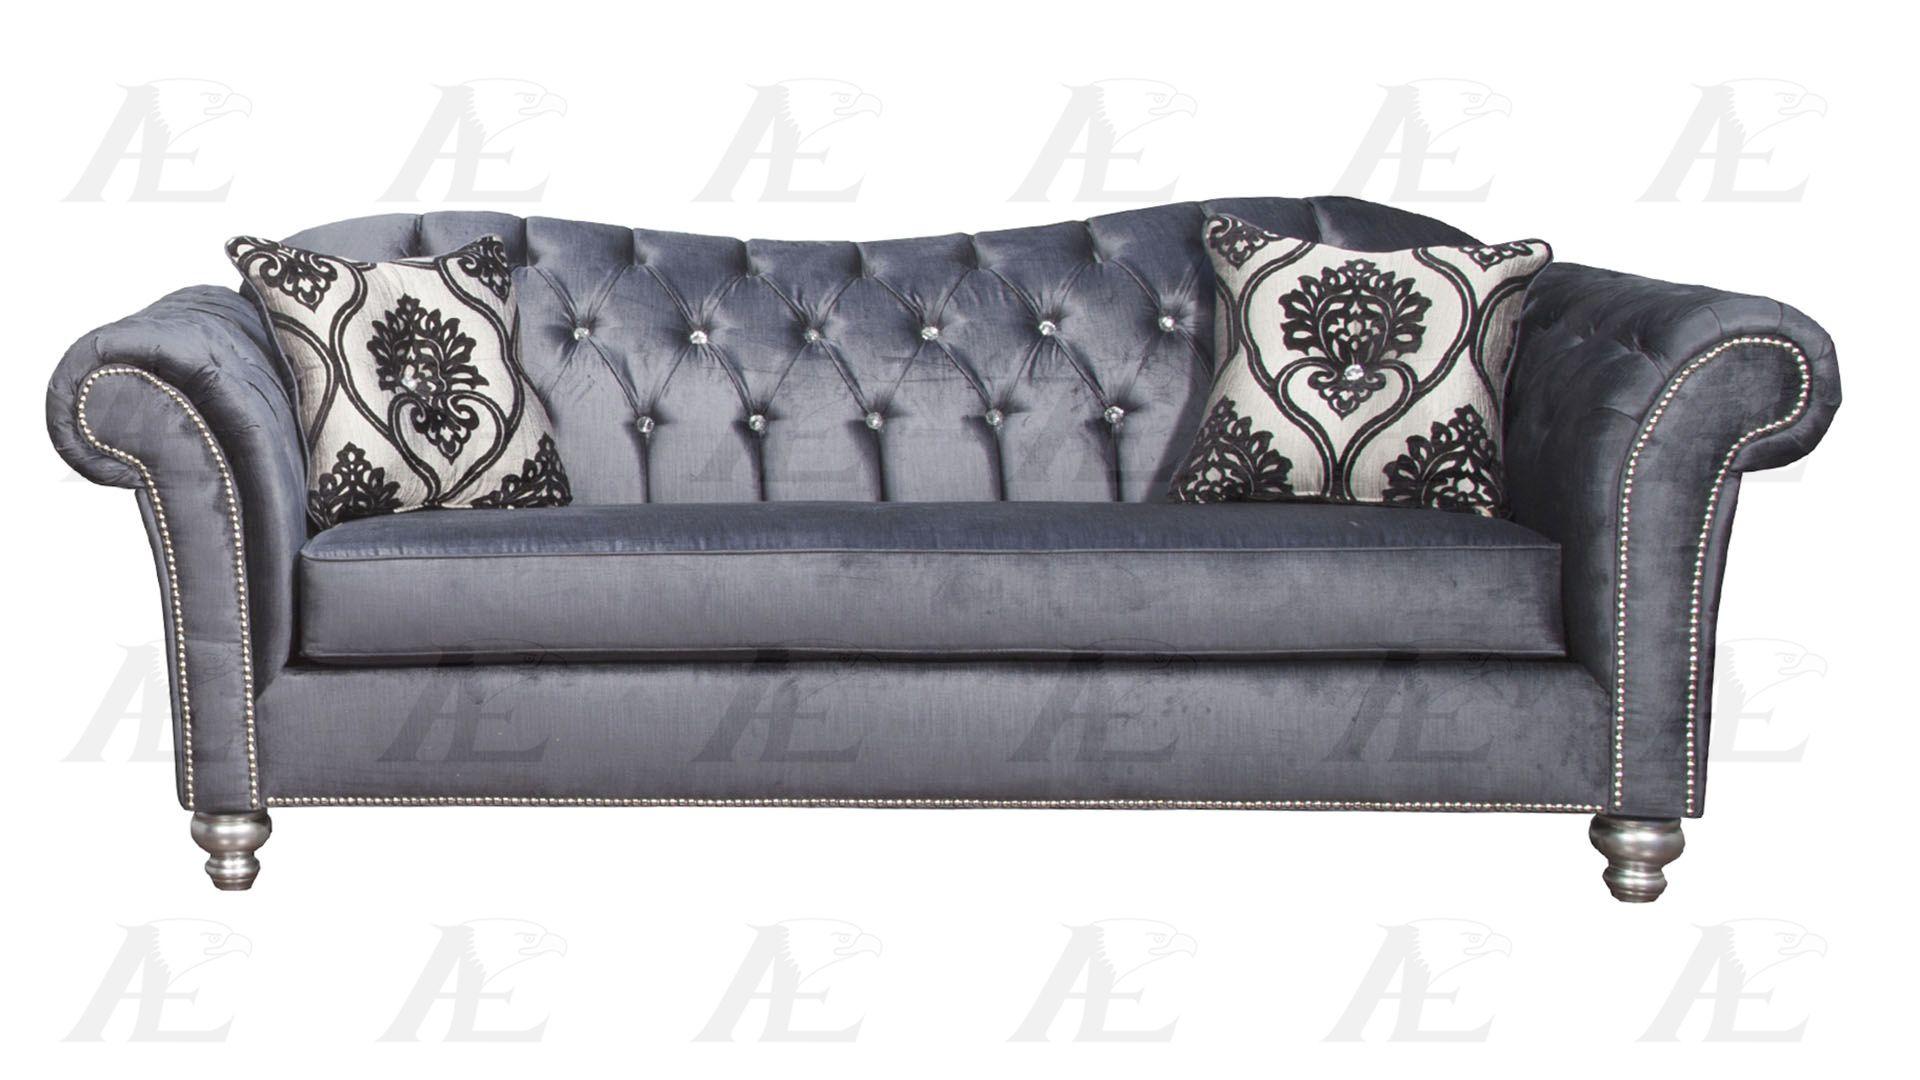 

    
American Eagle Furniture AE2600-GB Greyish BlueTufted Sofa and Loveseat Set Fabric Contemporary 2Pcs
